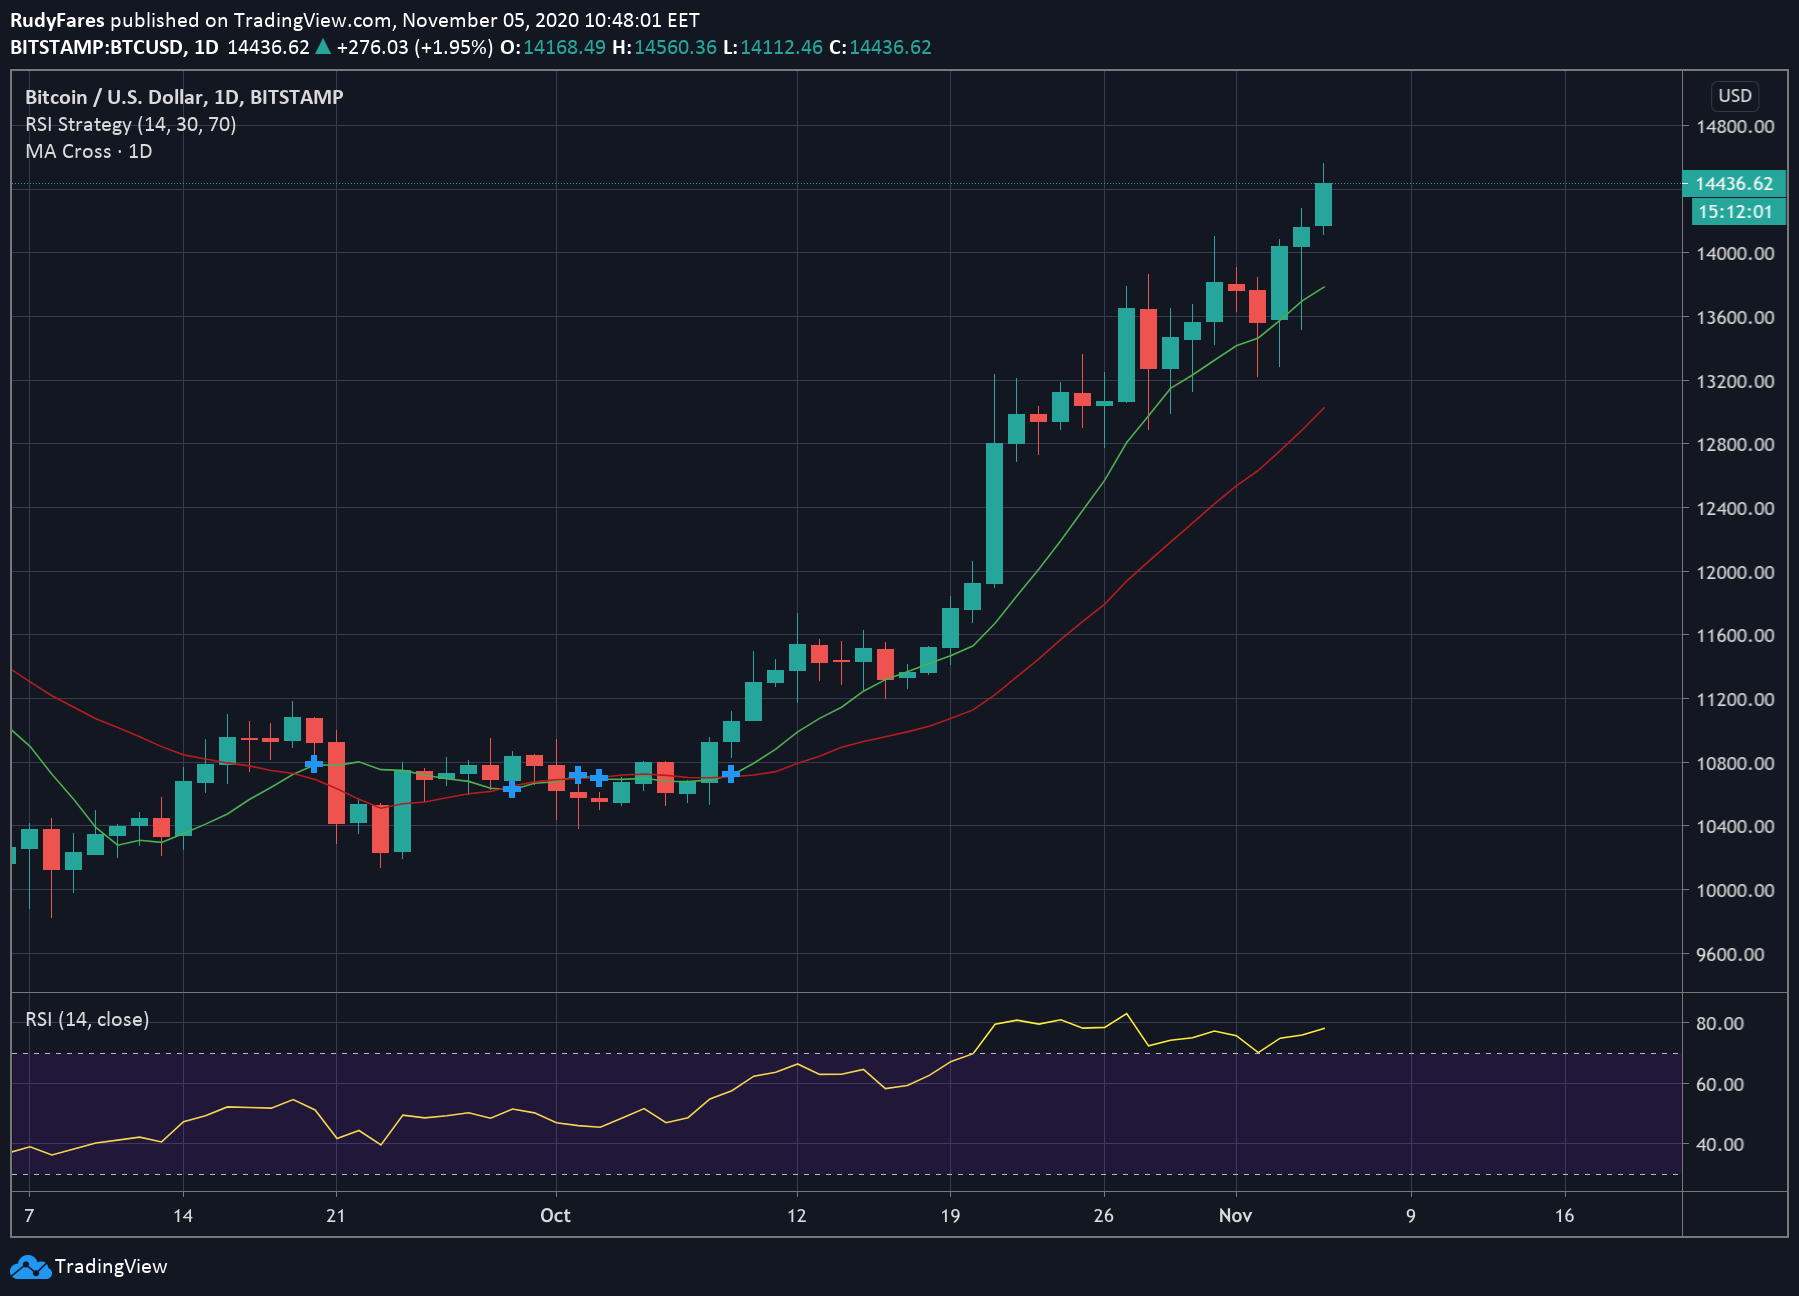 BTC/USD price 1D chart 